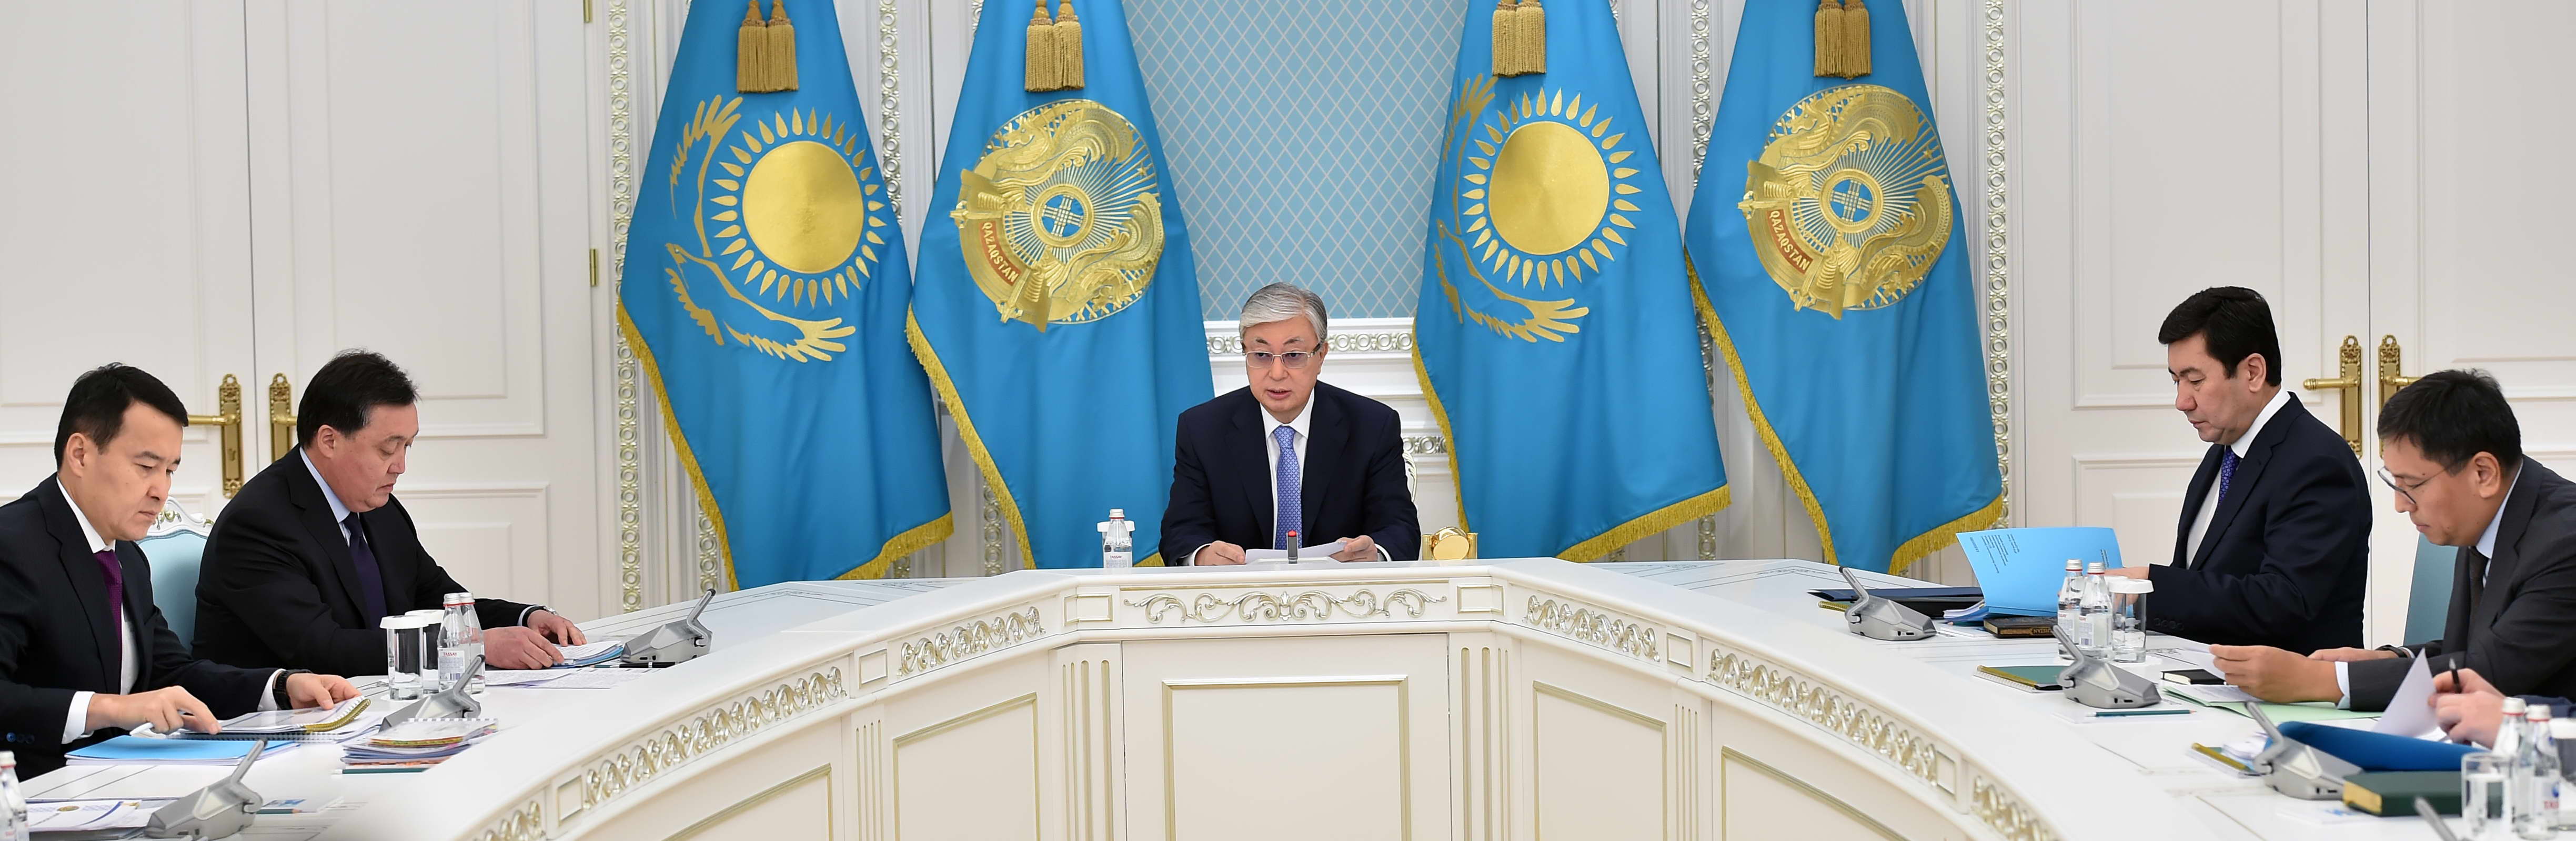 Касым-Жомарт Токаев: Нацбанку надо срочно вносить коррективы в проводимую политику